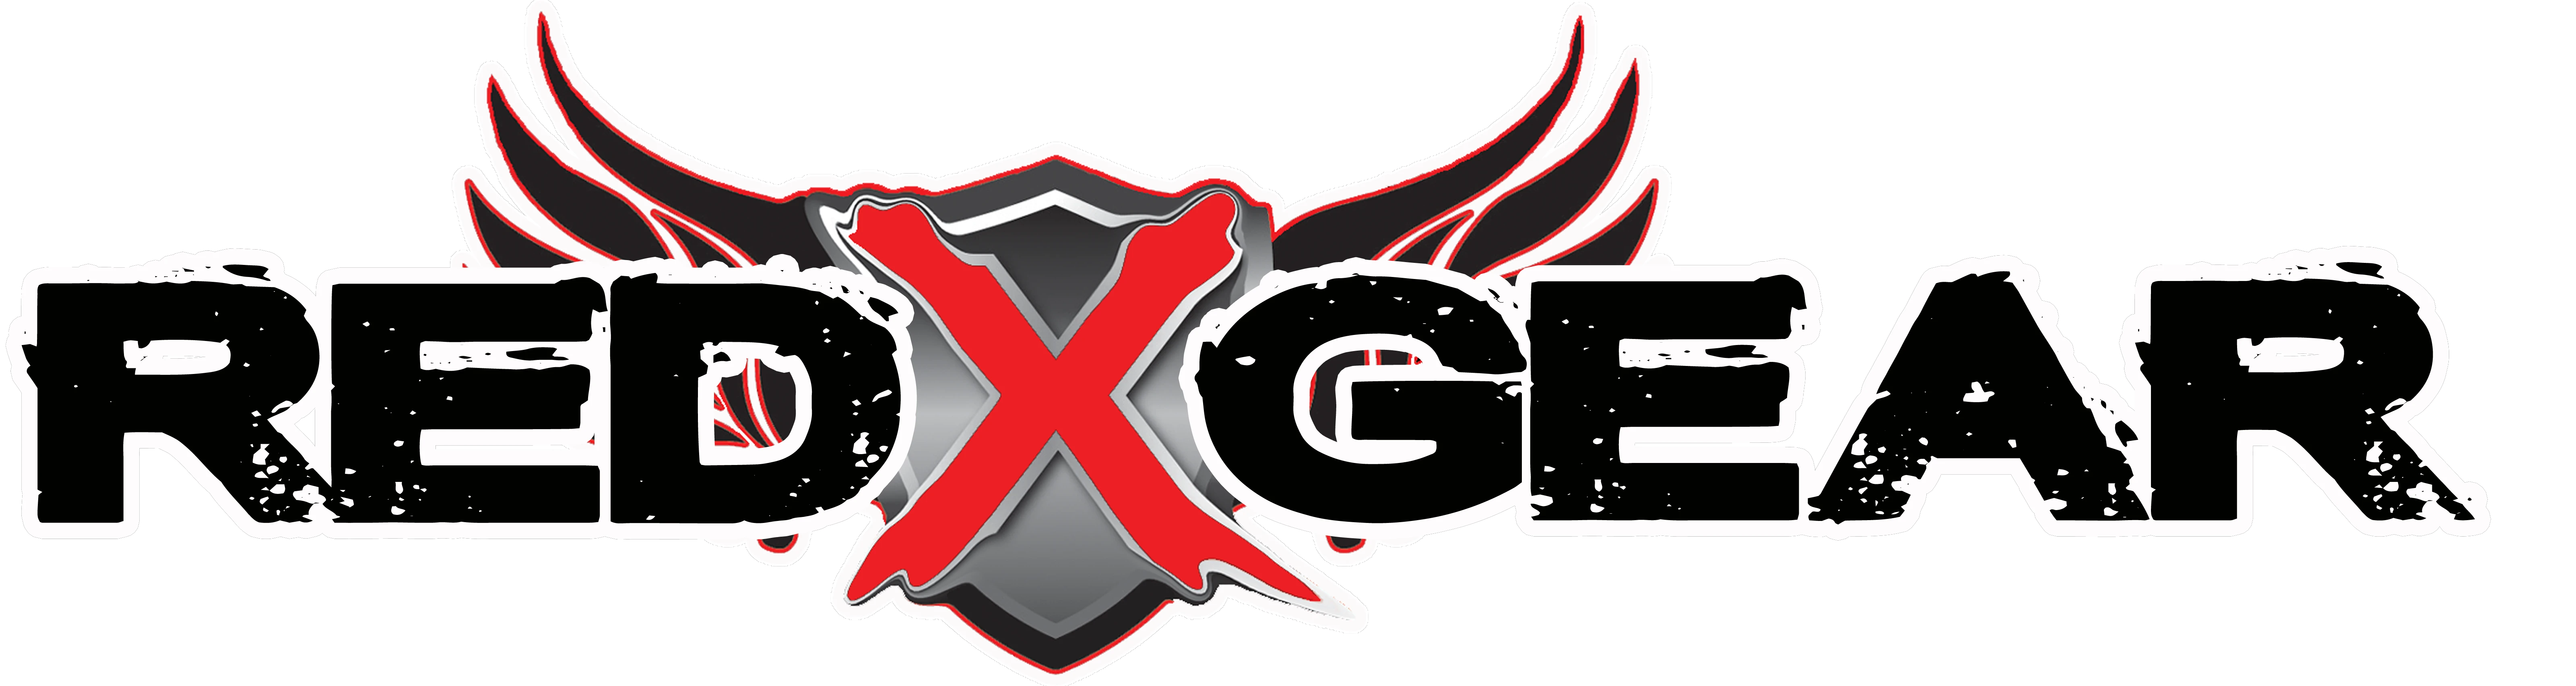 RedX Gear promotions 